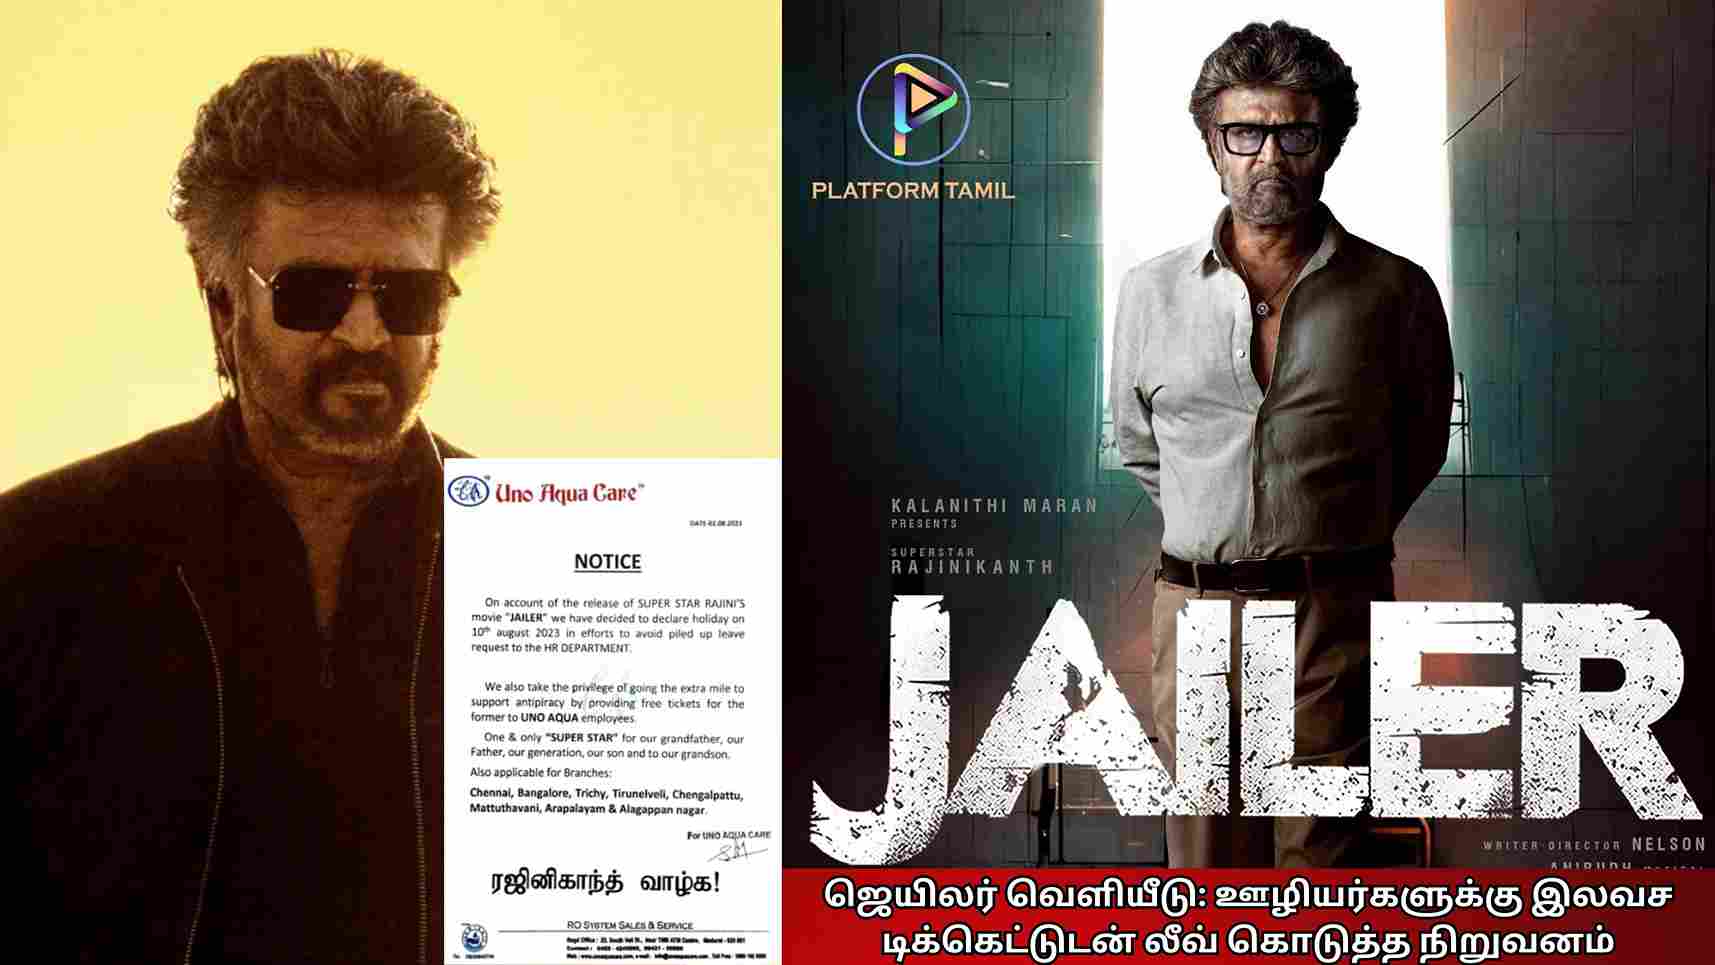 Free Jailer Movie Tickets - Platform Tamil